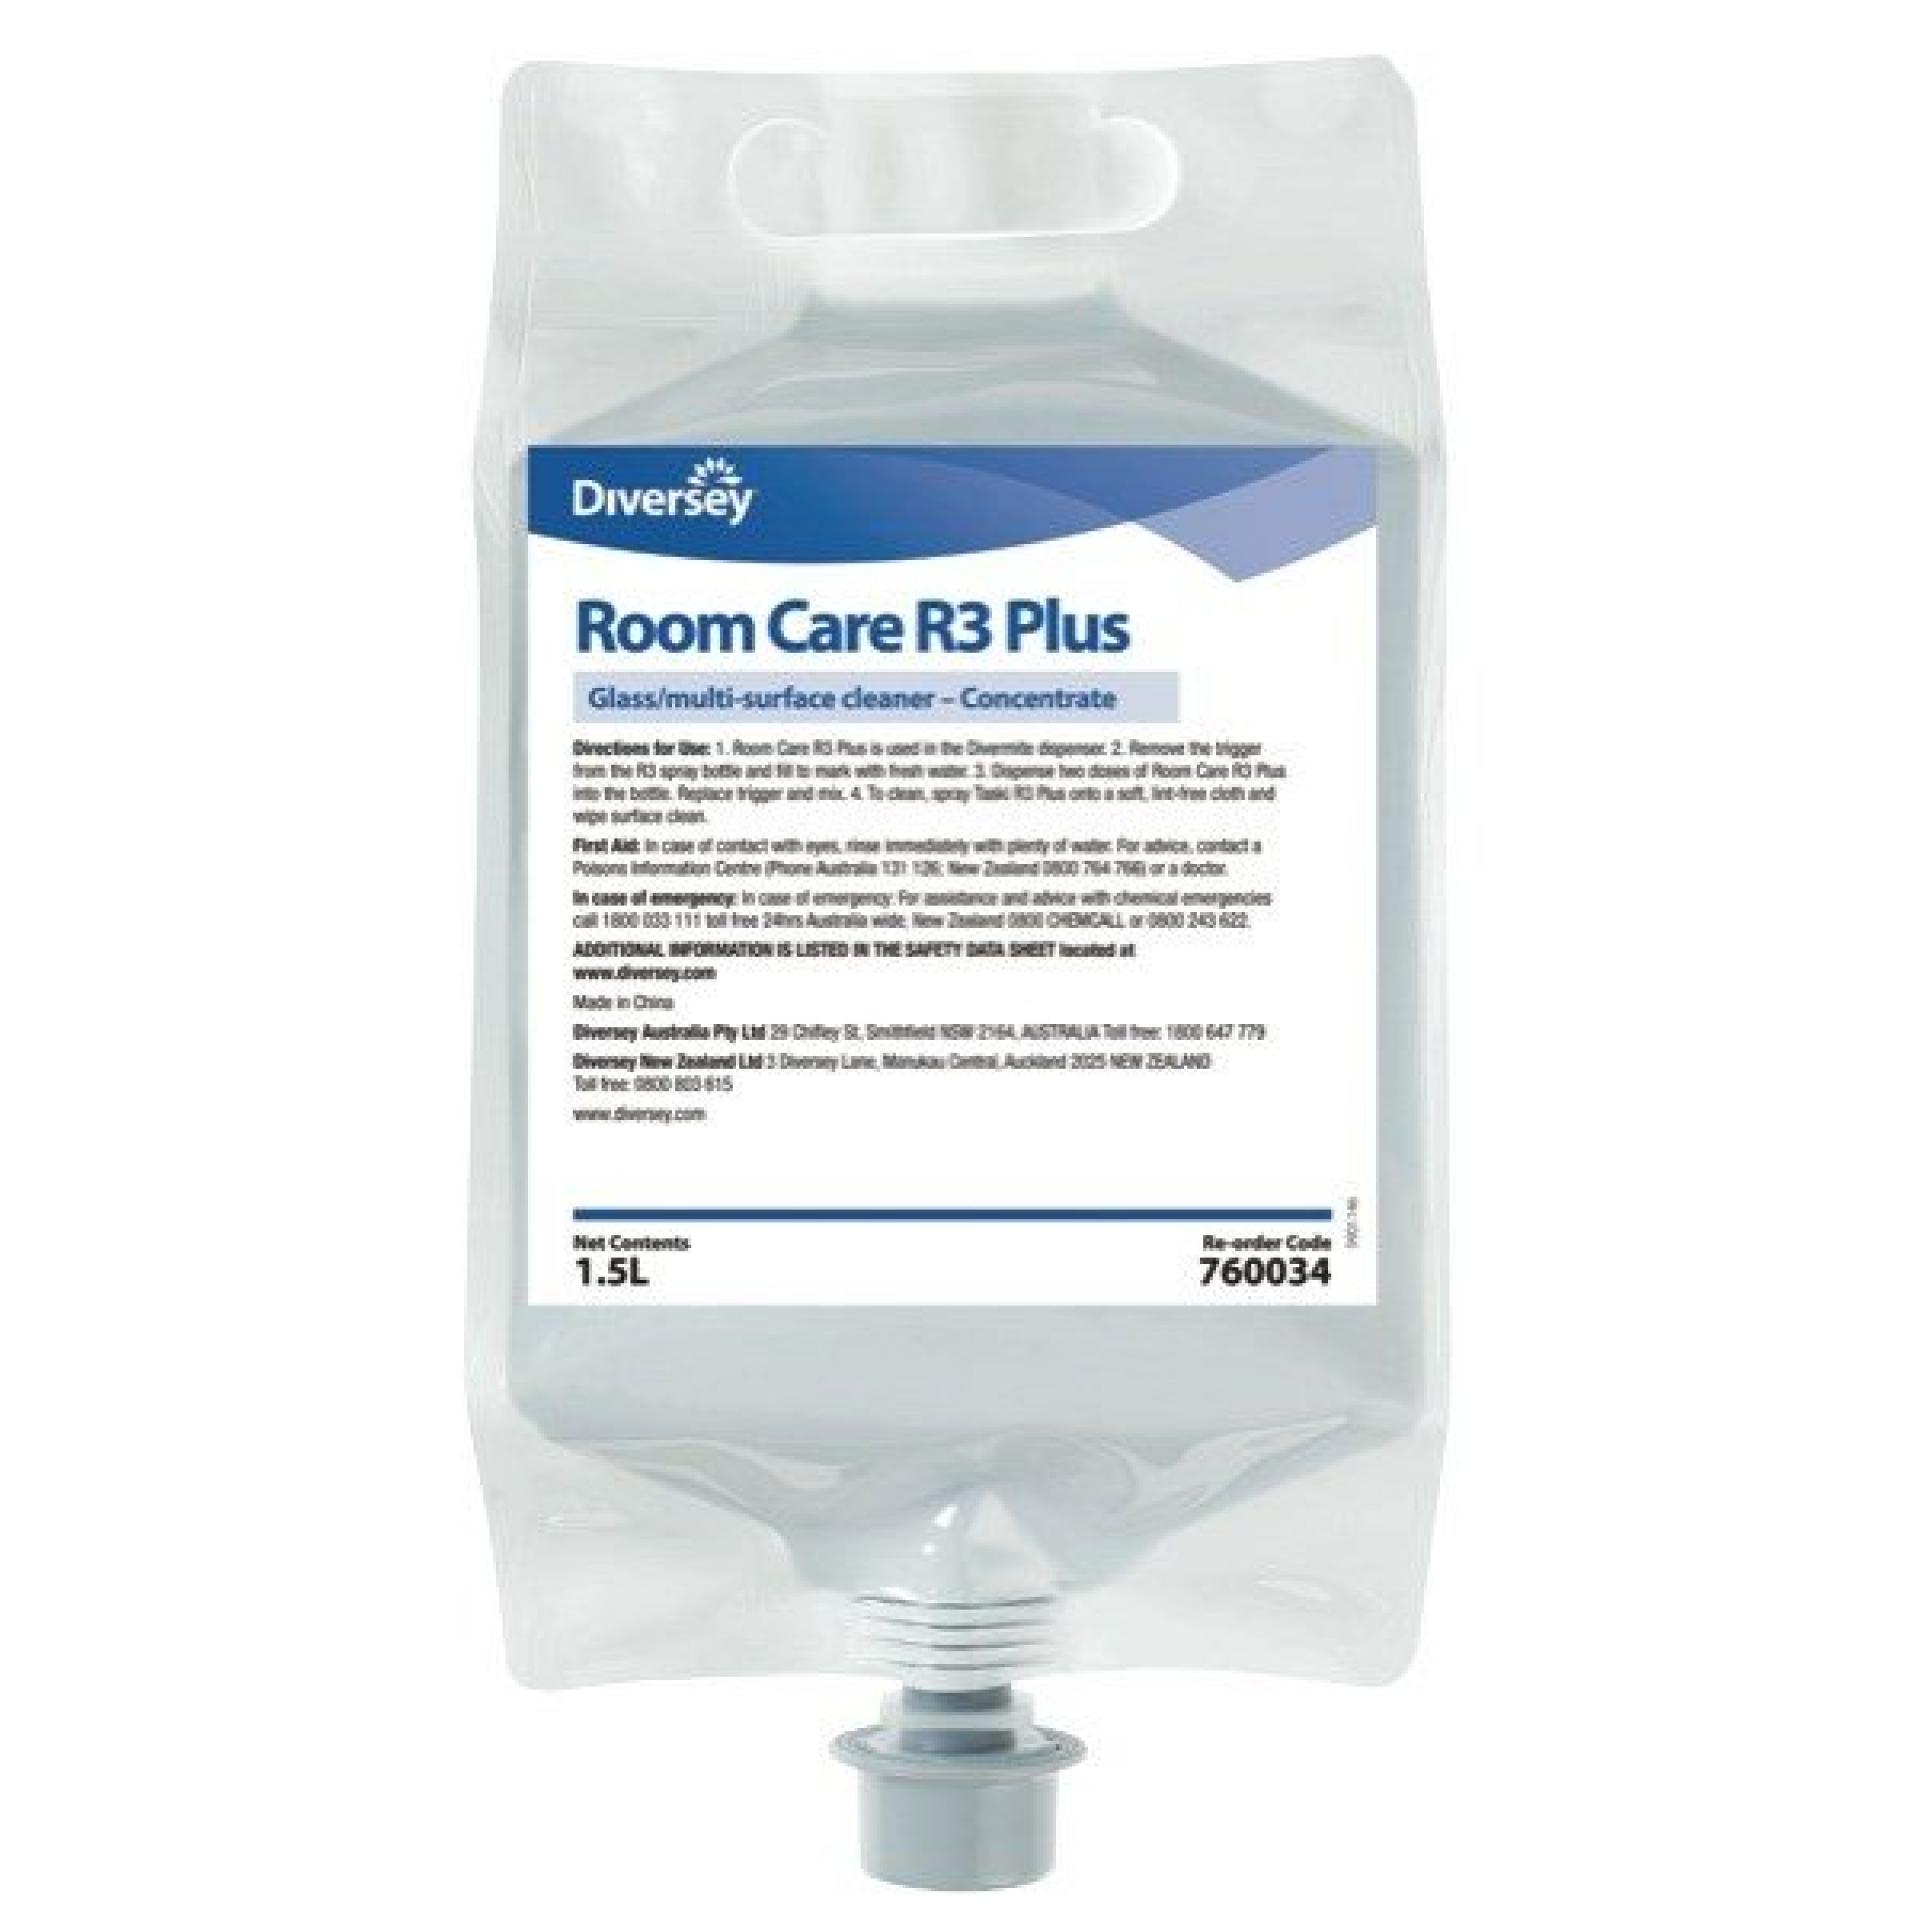 Diversey room care. Room Care r3 Plus. R1 Дайверси. Room Care r5.1-Plus (2x1,5кг)освежитель воздуха,концентрат. Diversey.